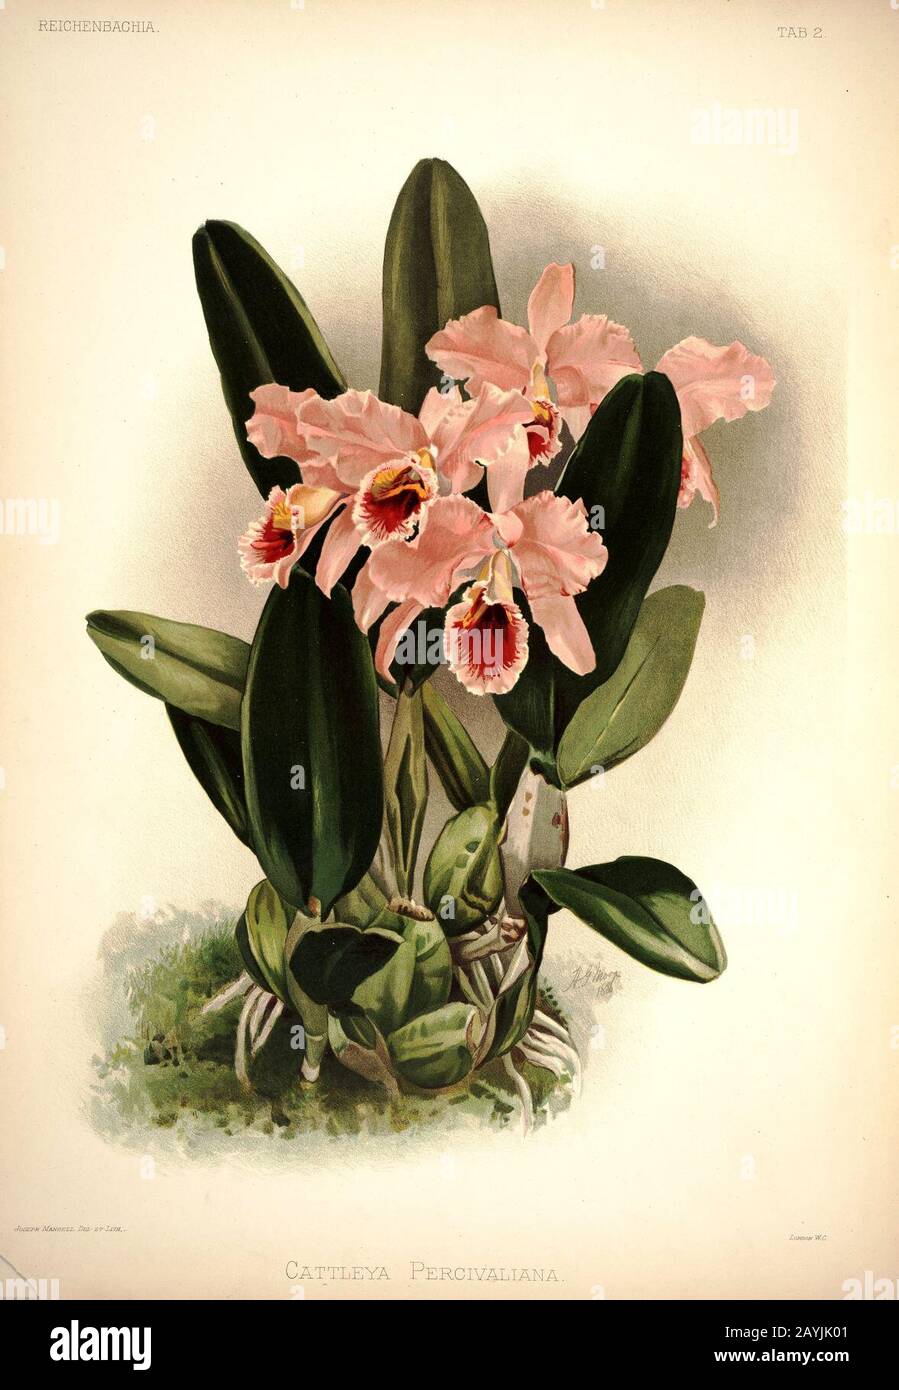 Frederick Sander - Reichenbachia I plate 02 (1888) - Cattleya percivaliana. Stock Photo